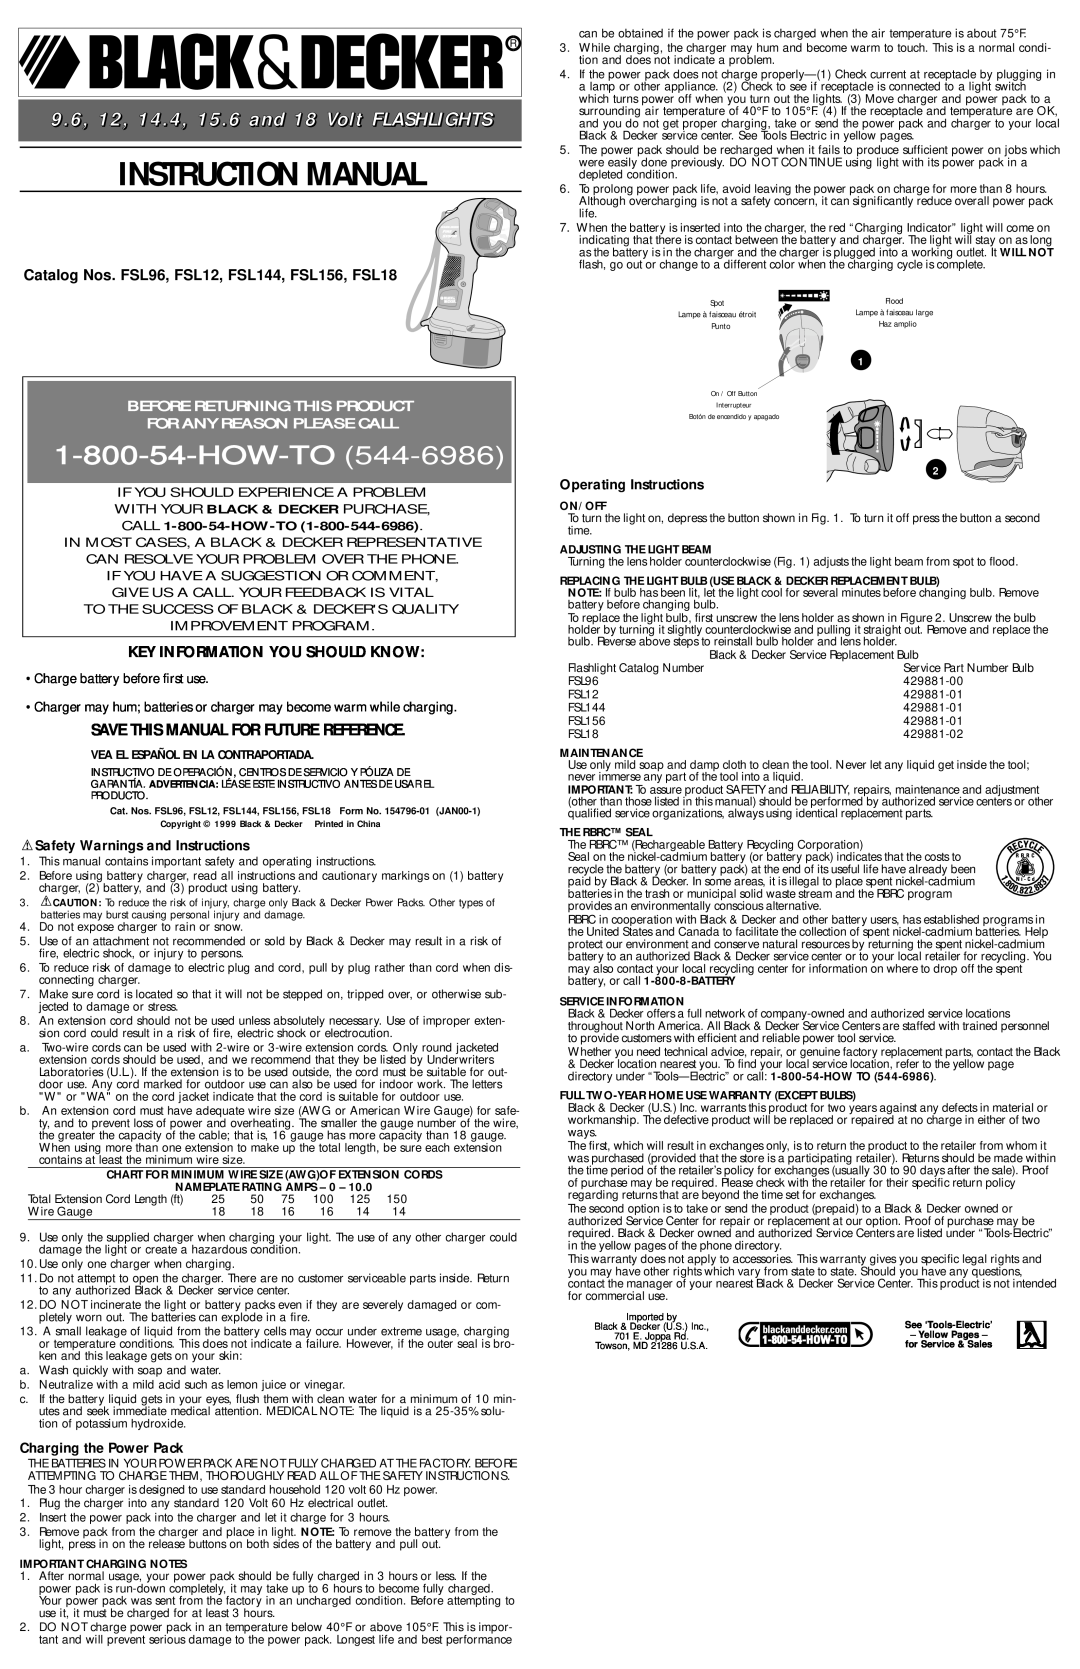 Black & Decker FSL156 operating instructions 9.6, 12, 14.4, 15.6 and 18 Volt FLASHLIGHTS, Key Information You Should Know 